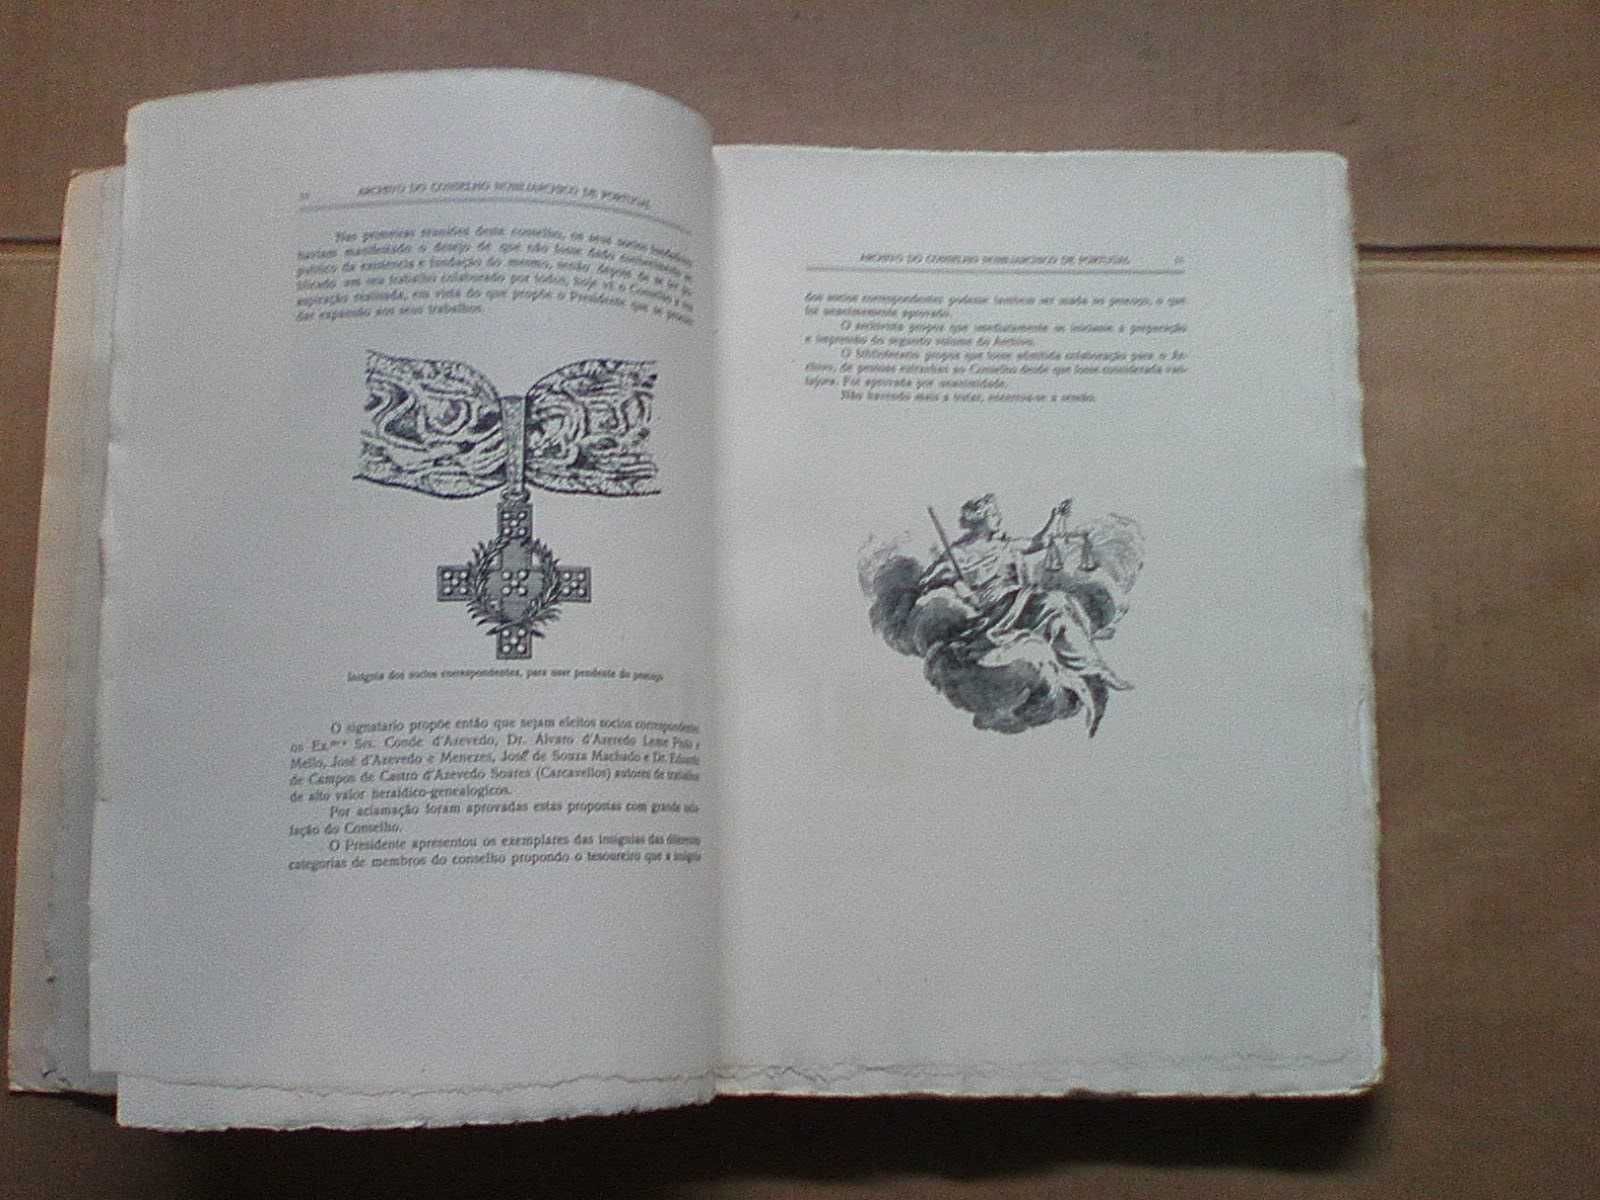 Archivo do conselho nobiliarchico de Portugal - II Volume